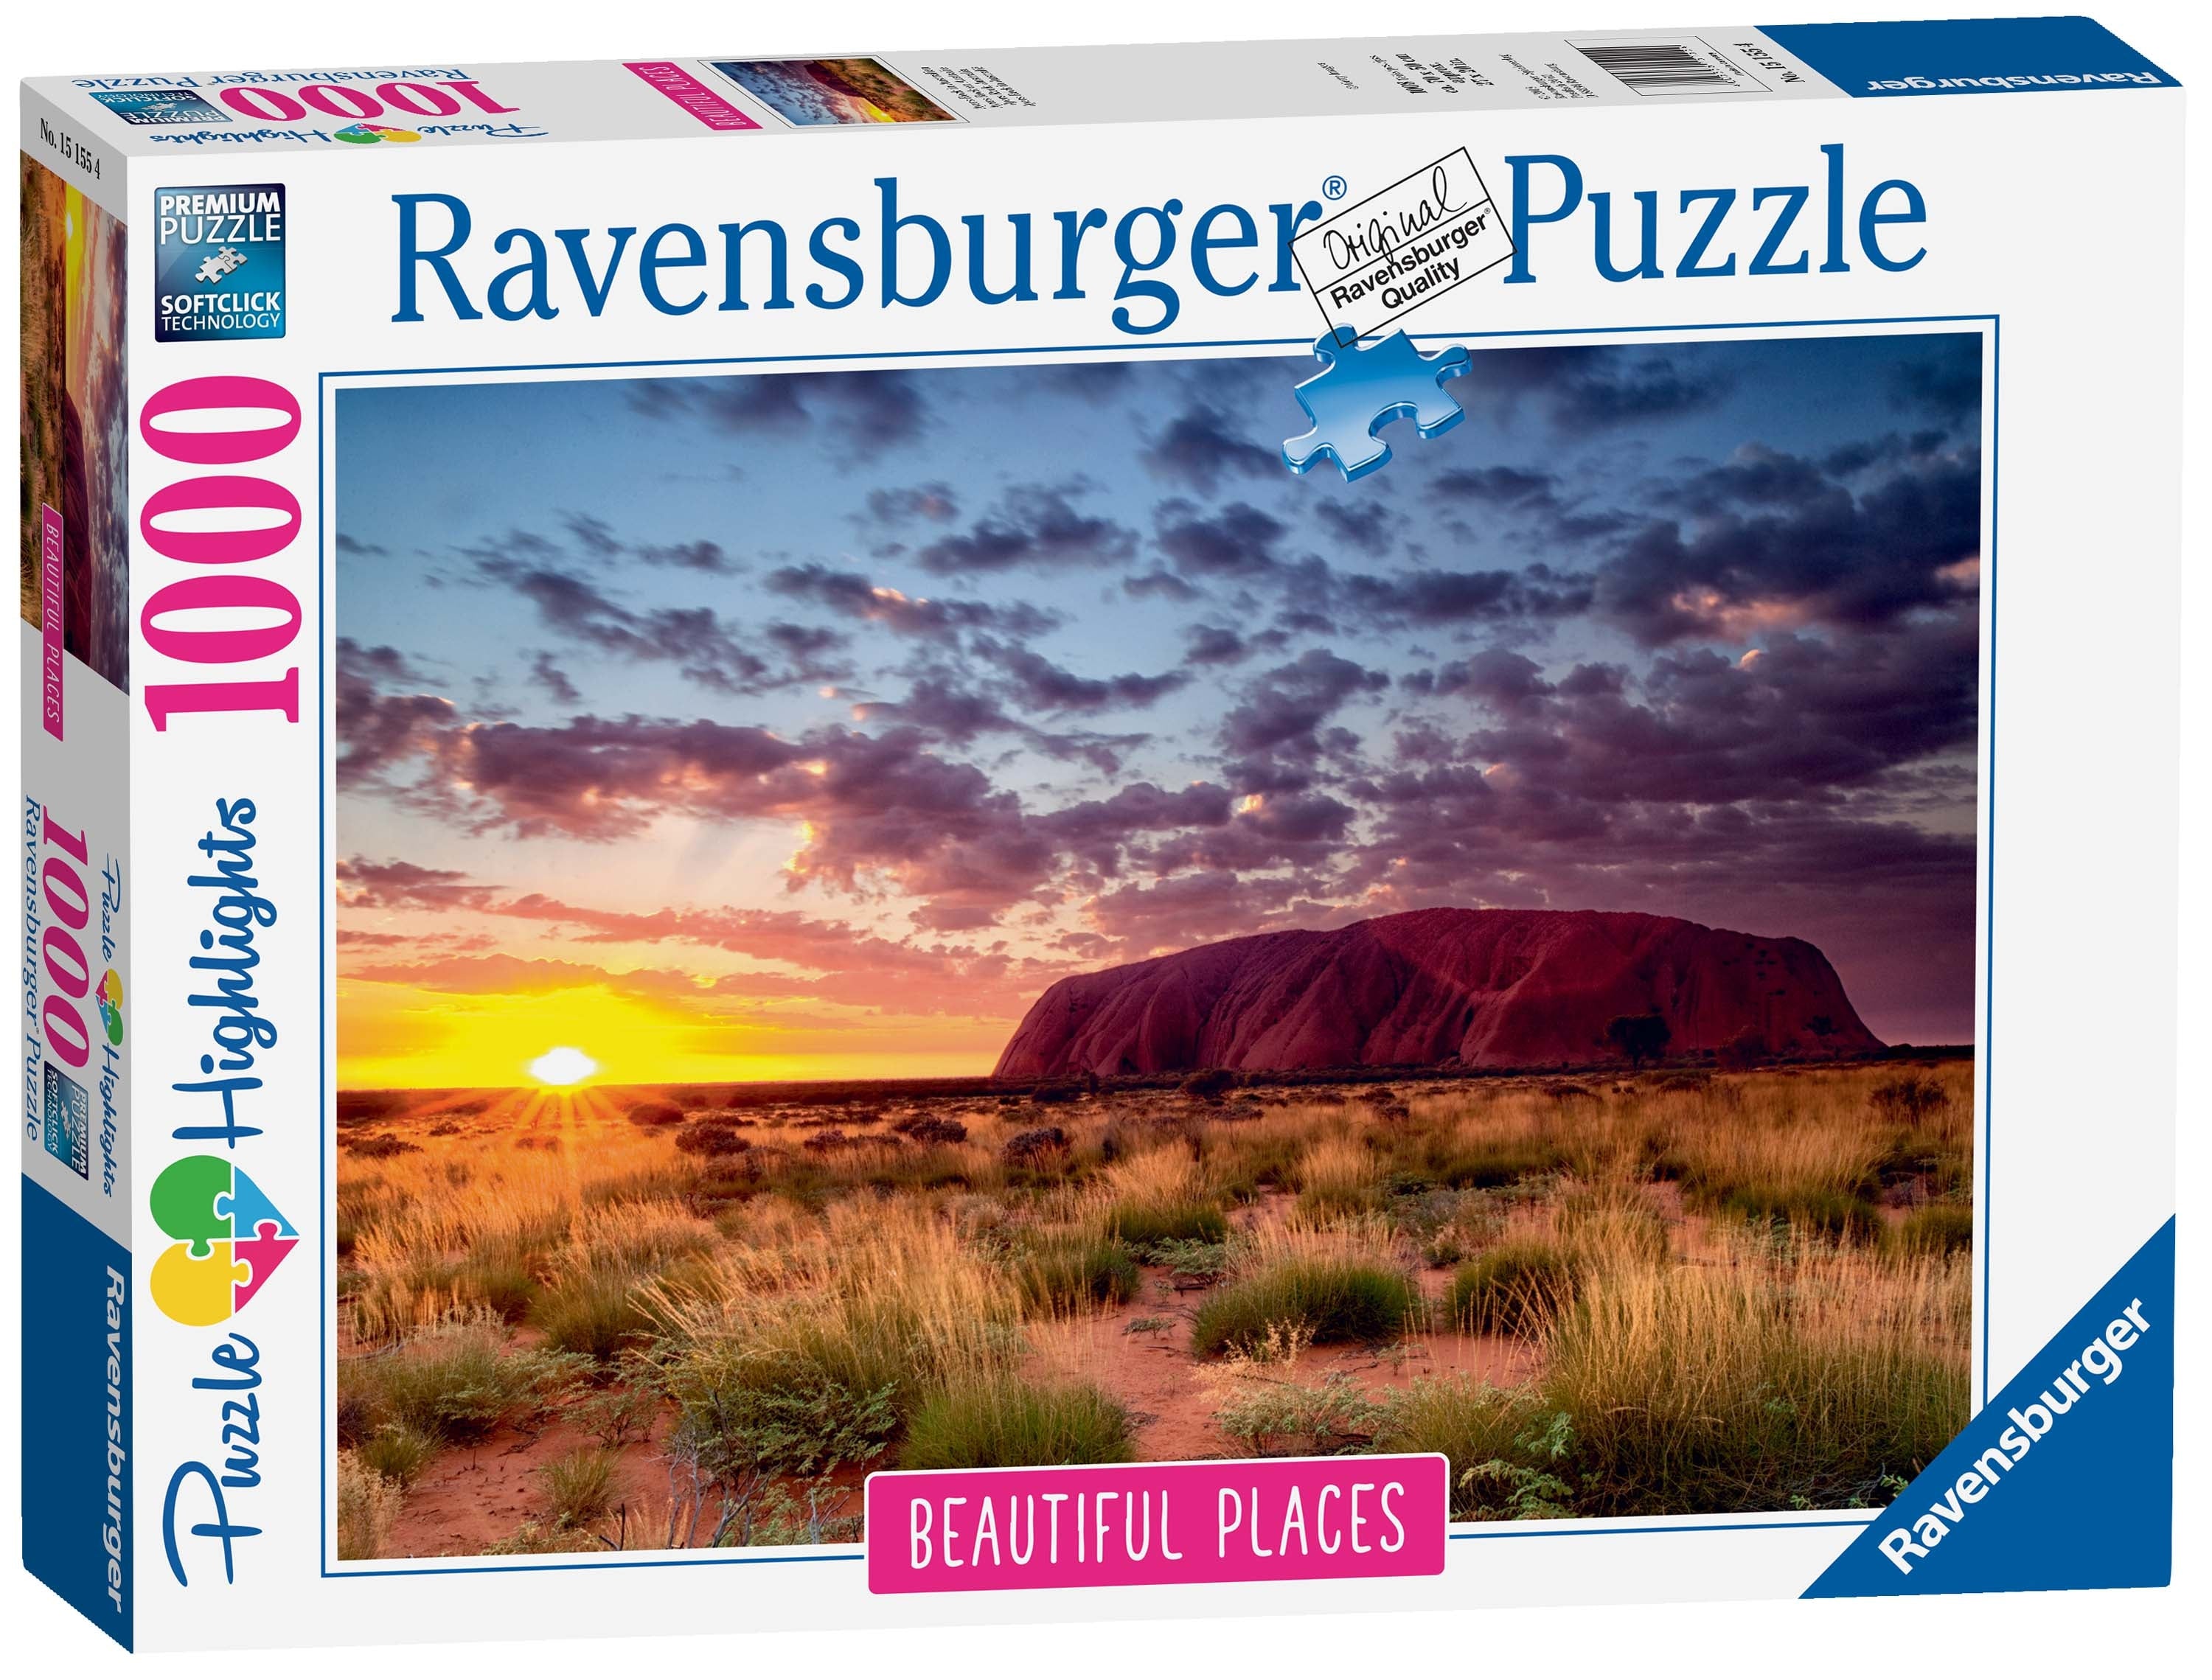 Ayers Rock Australia Puzzle 1000pc